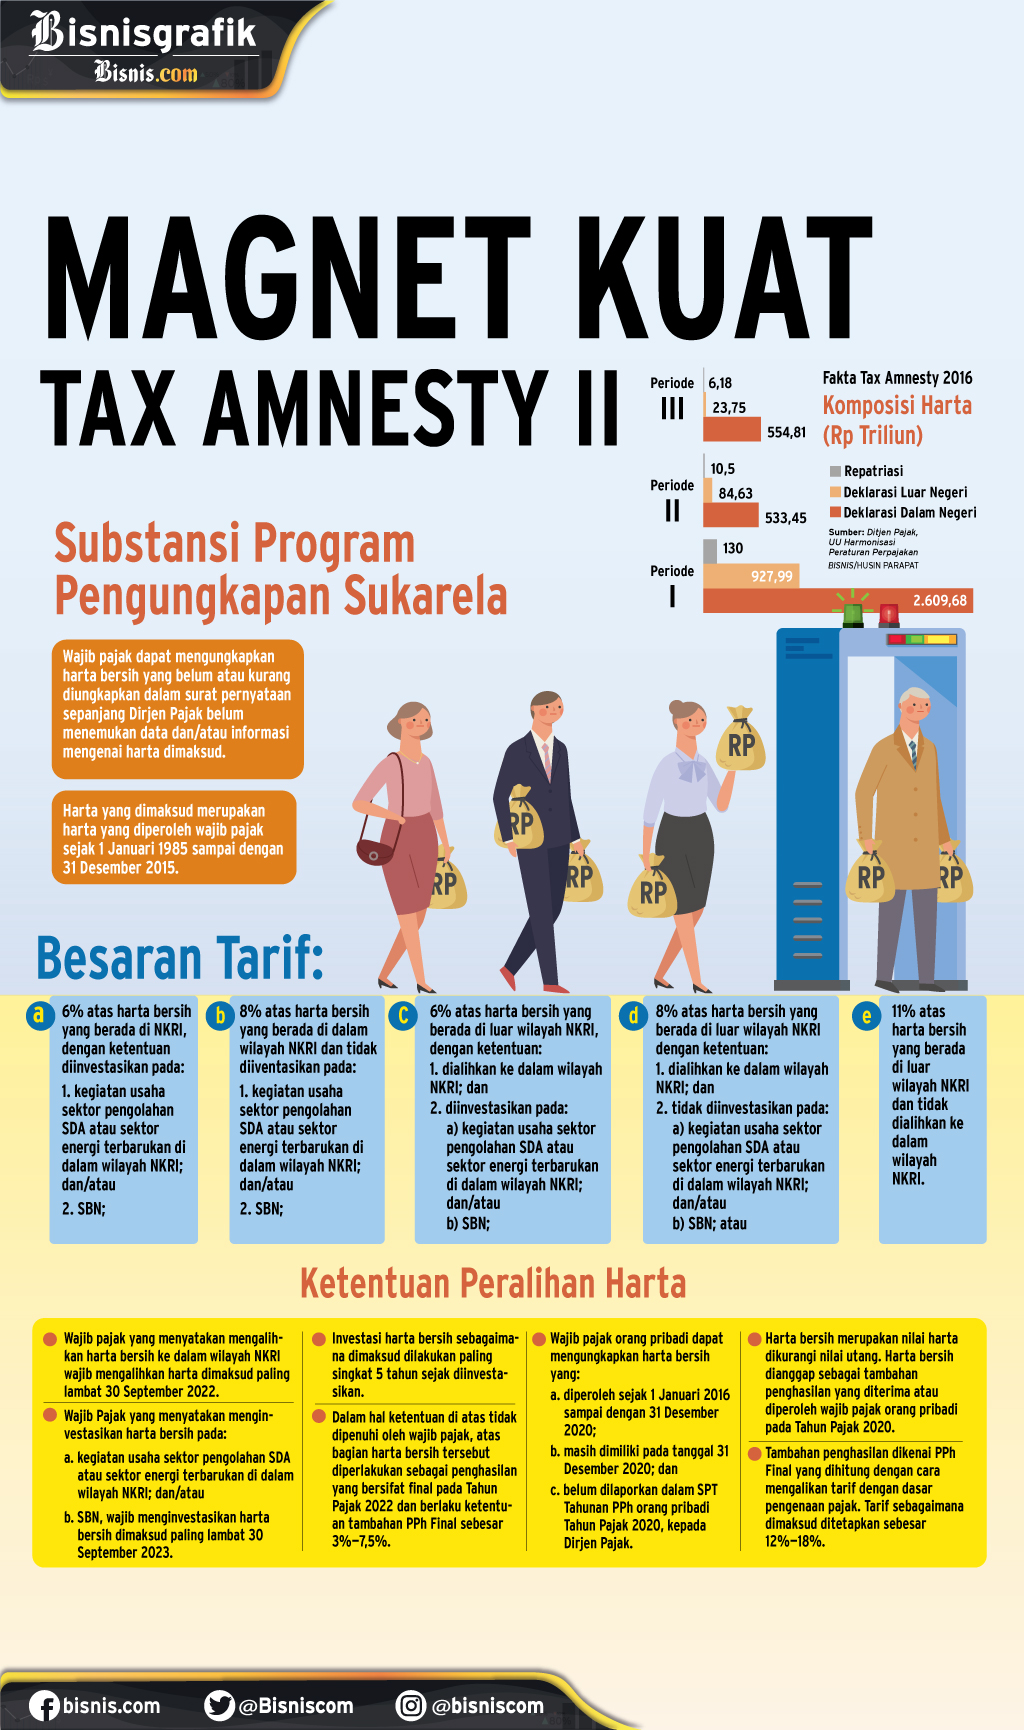 KEPATUHAN WAJIB PAJAK : Magnet Kuat Tax Amnesty II